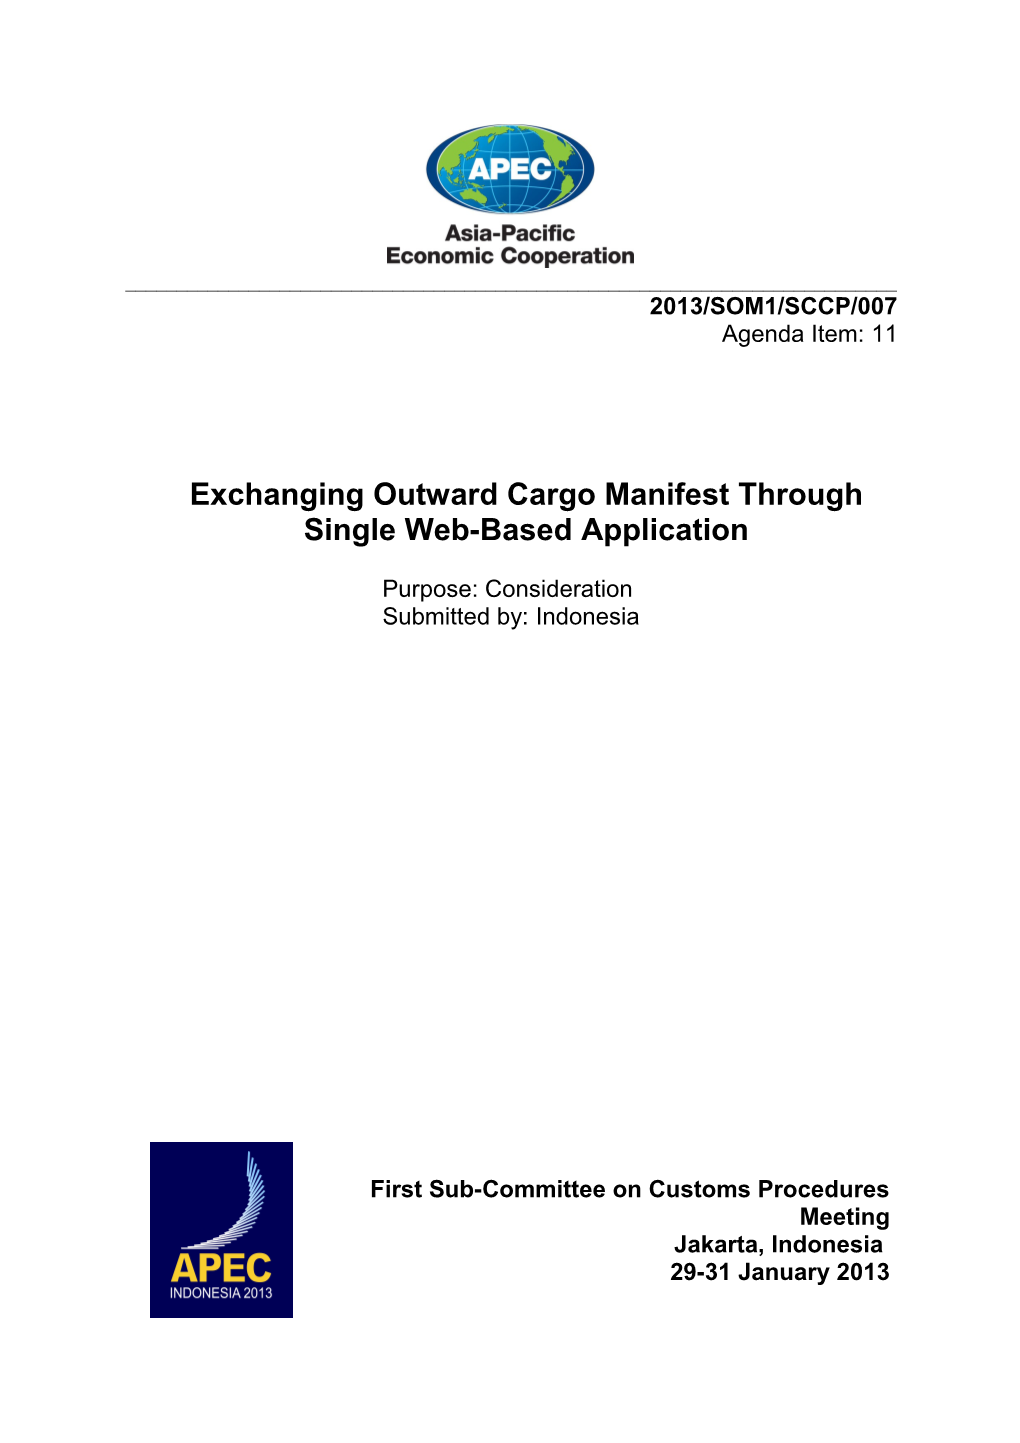 Exchanging Outward Cargo Manifest Through Single Web-Based Application